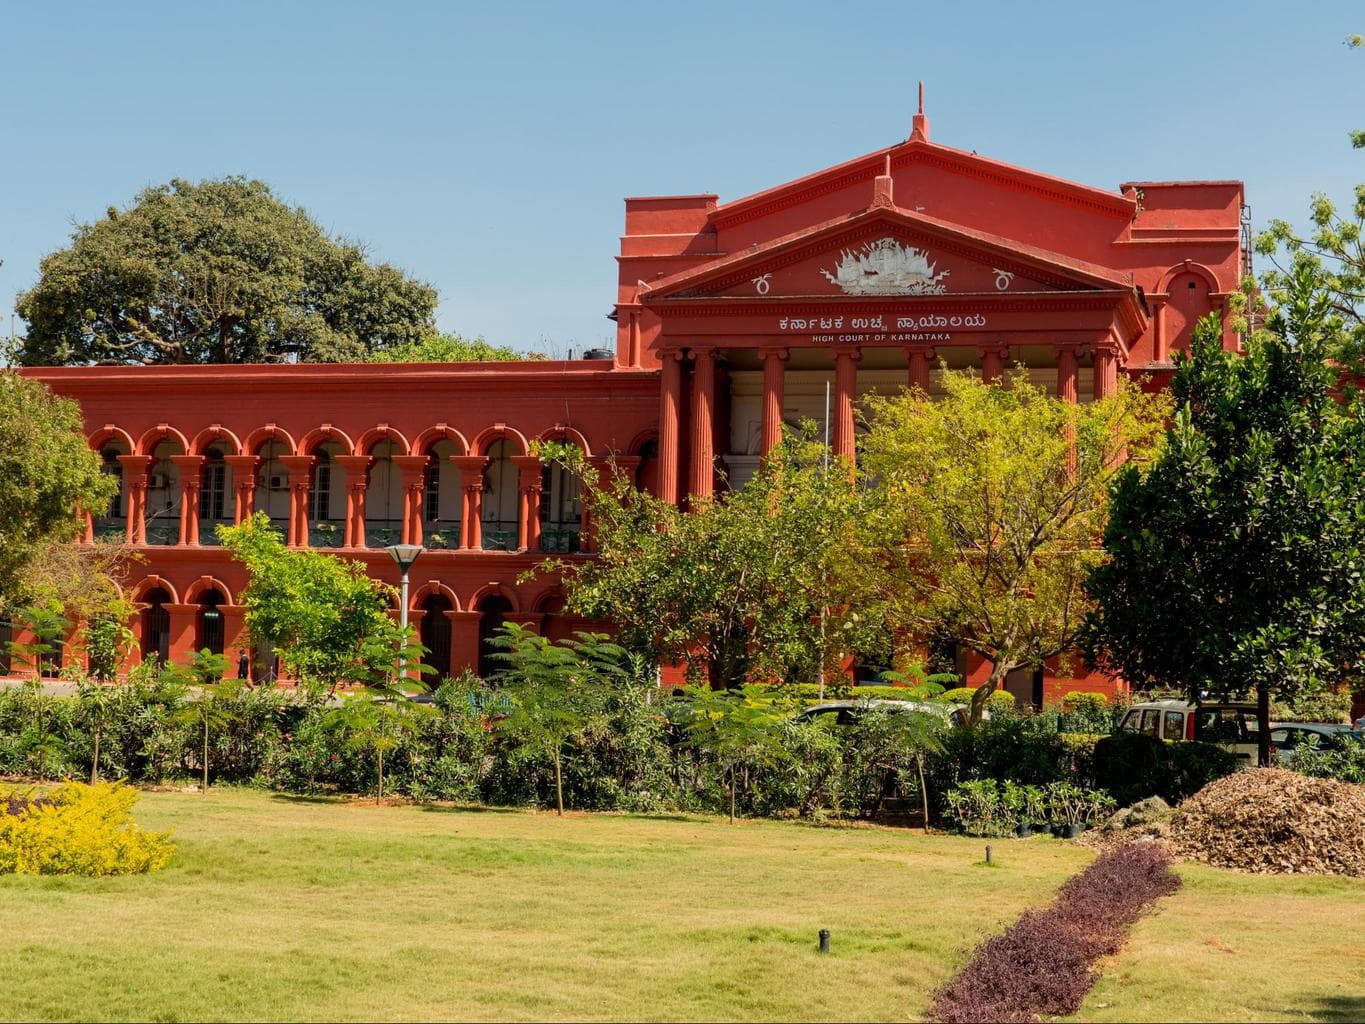 Facade of the High Court of Karnataka